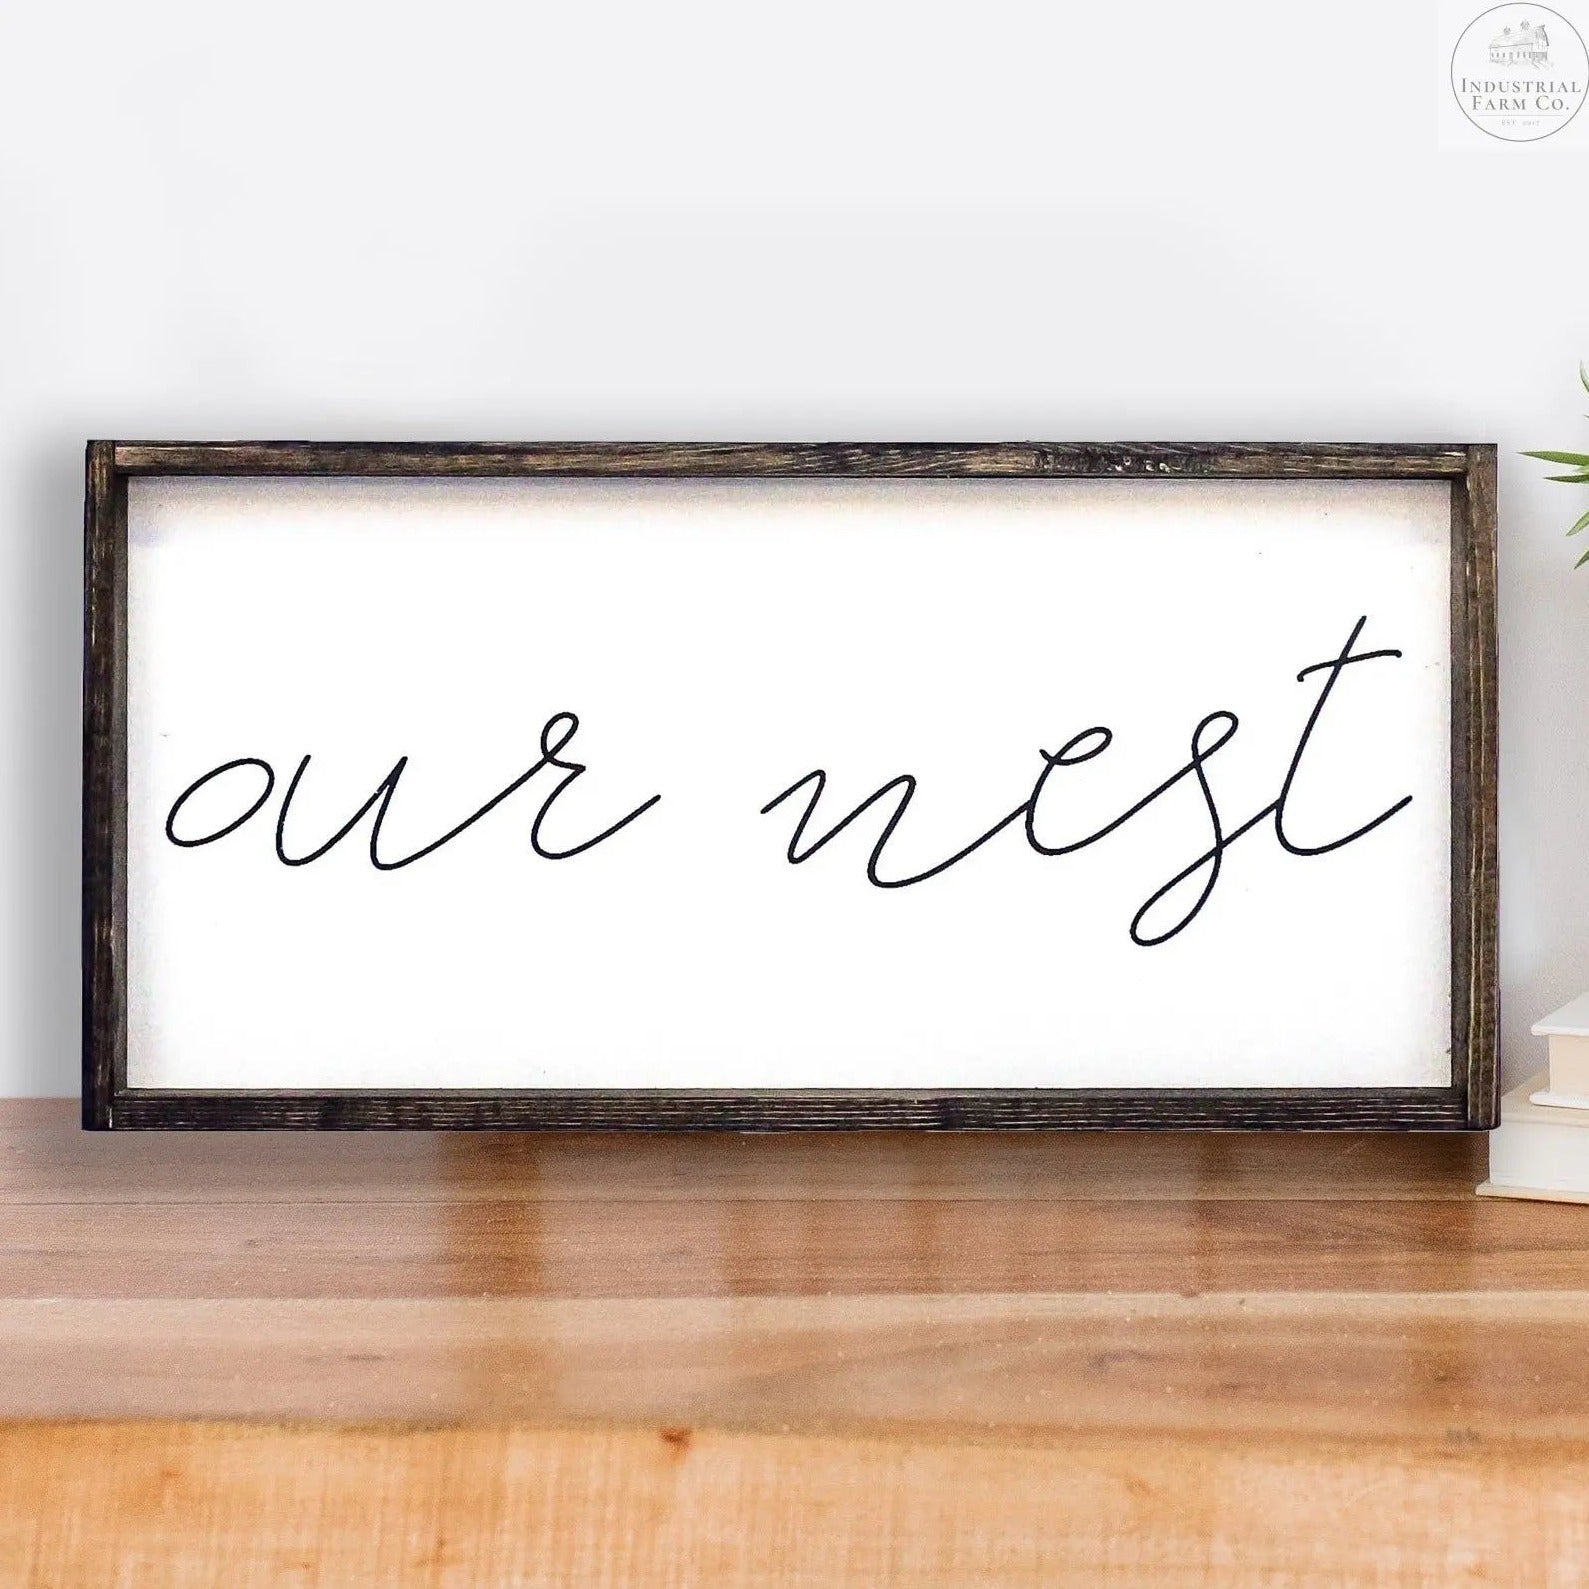 "Our Nest" Wood Sign Framed Sign Default Title   | Industrial Farm Co